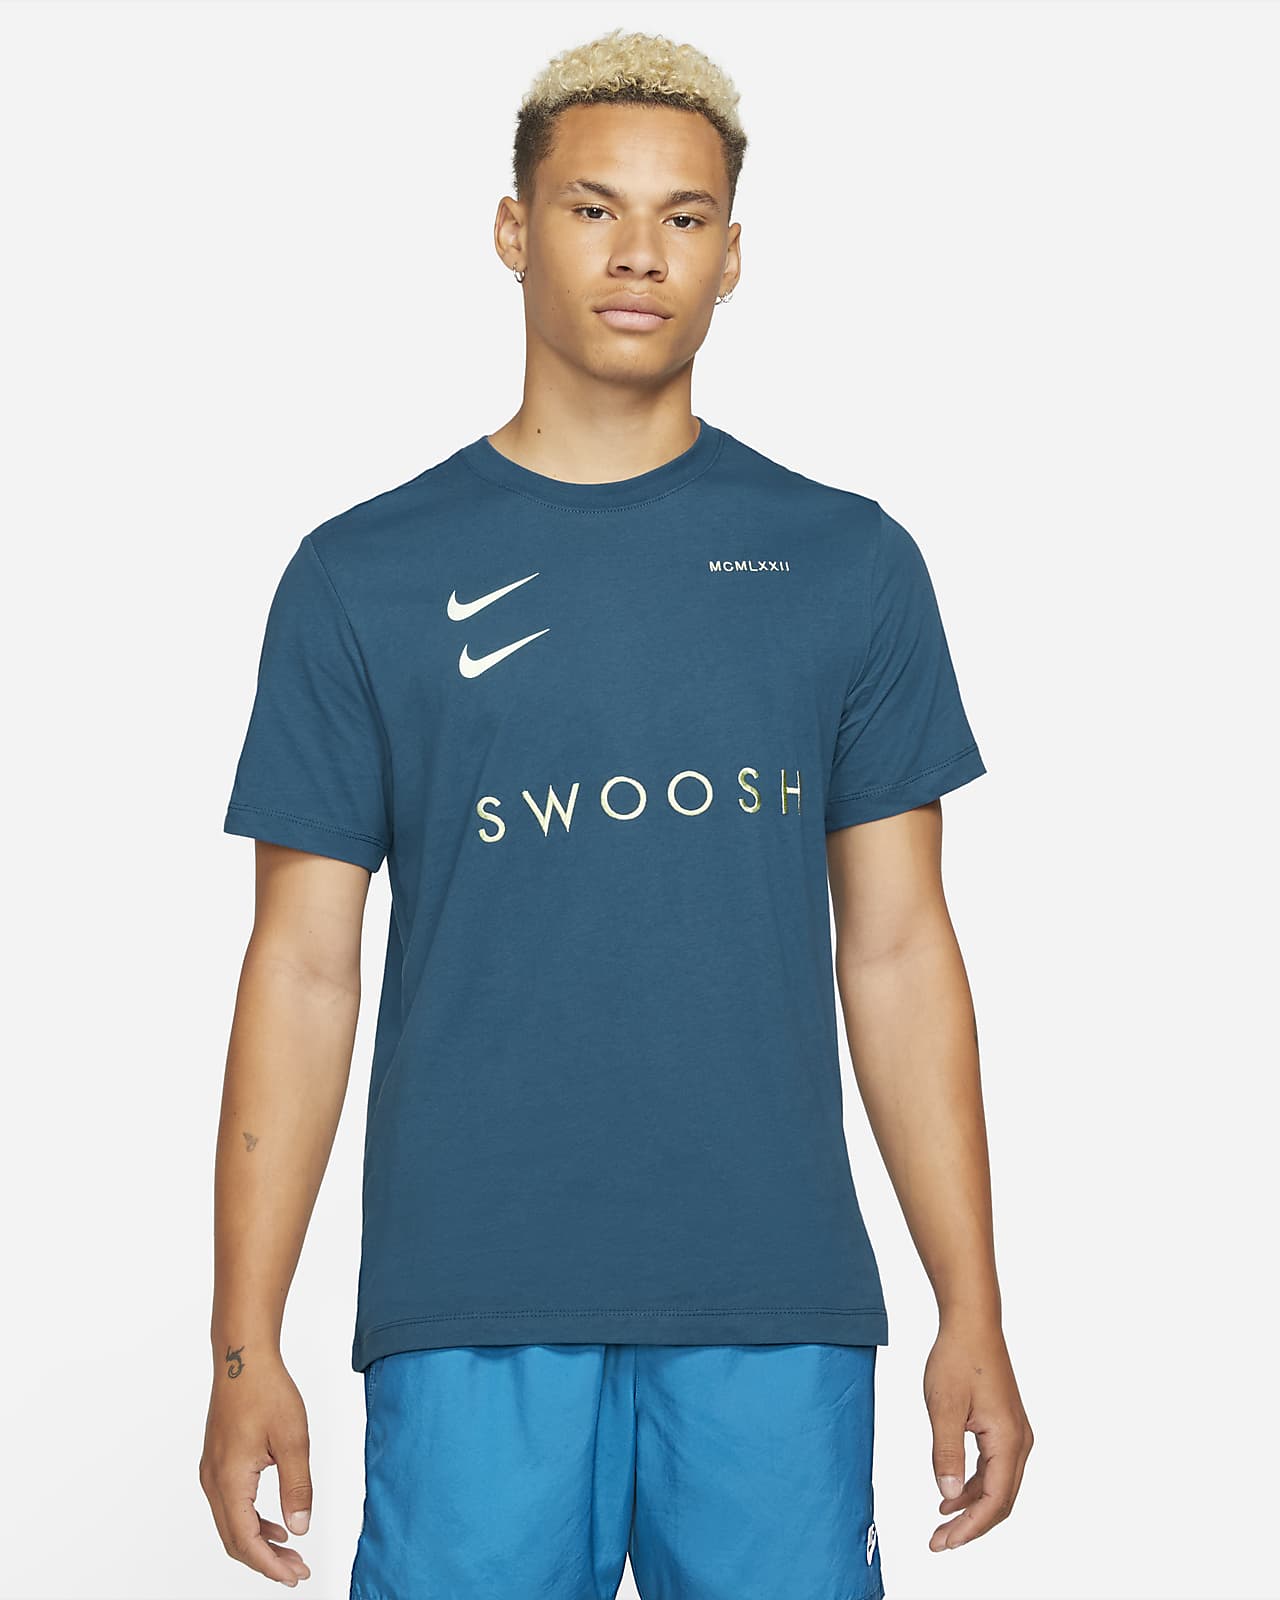 wijn onszelf Wiskunde Nike Sportswear Swoosh T Shirt Flash Sales, SAVE 53% - mpgc.net